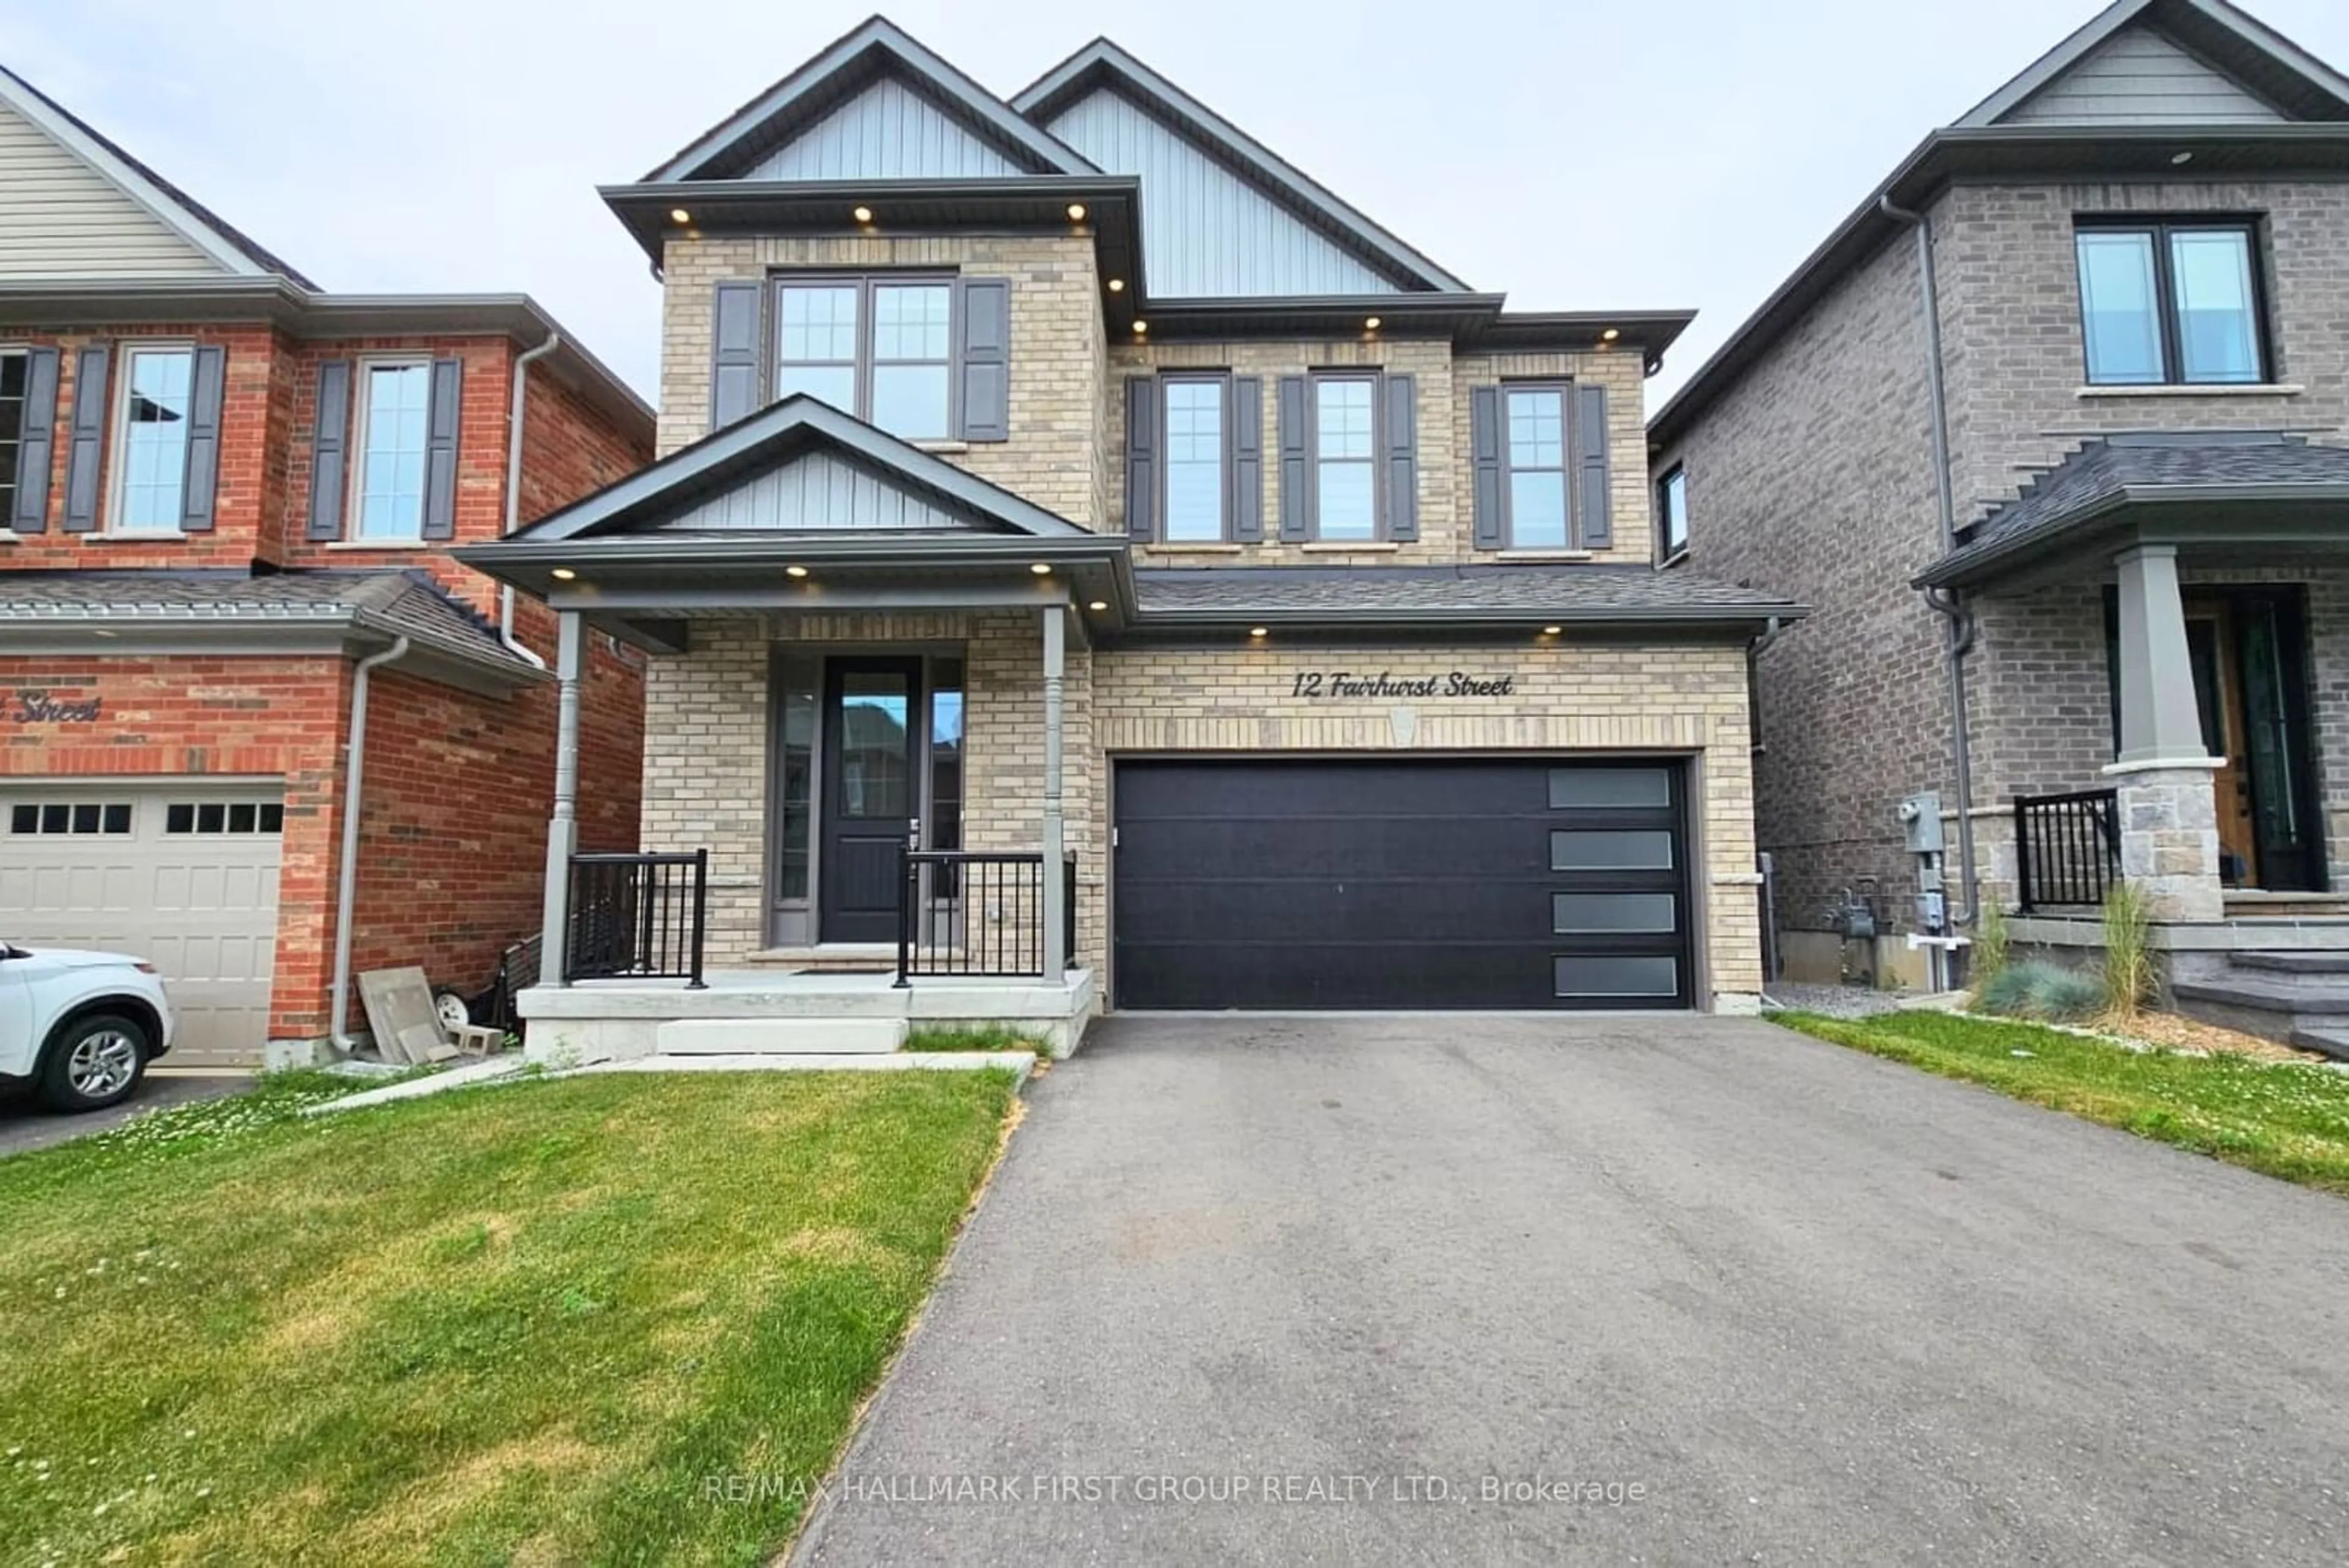 Home with brick exterior material for 12 Fairhurst St, Port Hope Ontario L1A 0E4